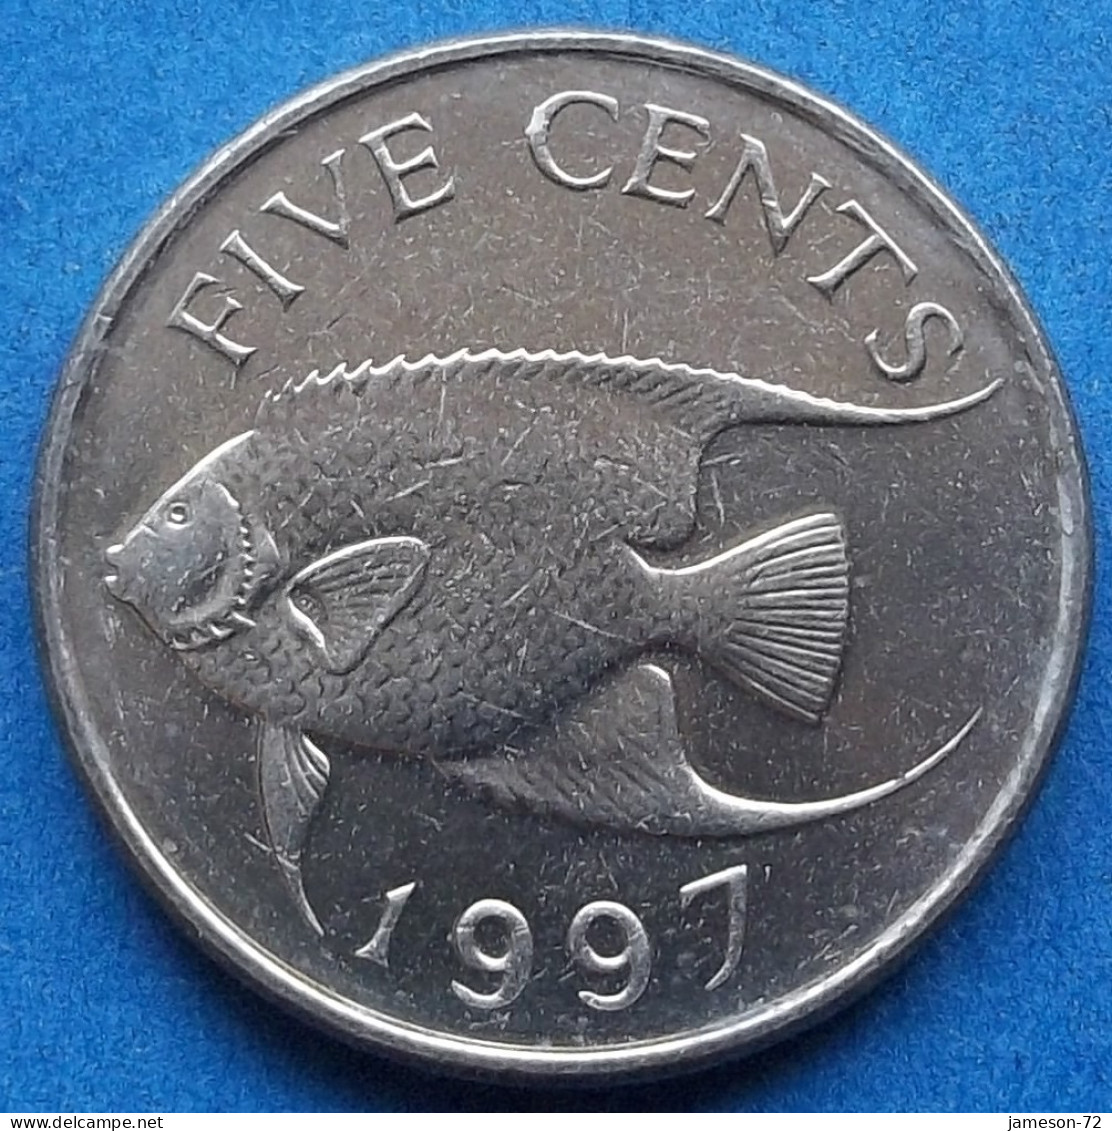 BERMUDA - 5 Cents 1997 "Queen Angel Fish" KM# 45 Elizabeth II Decimal Coinage (1970-2022) - Edelweiss Coins - Bermuda